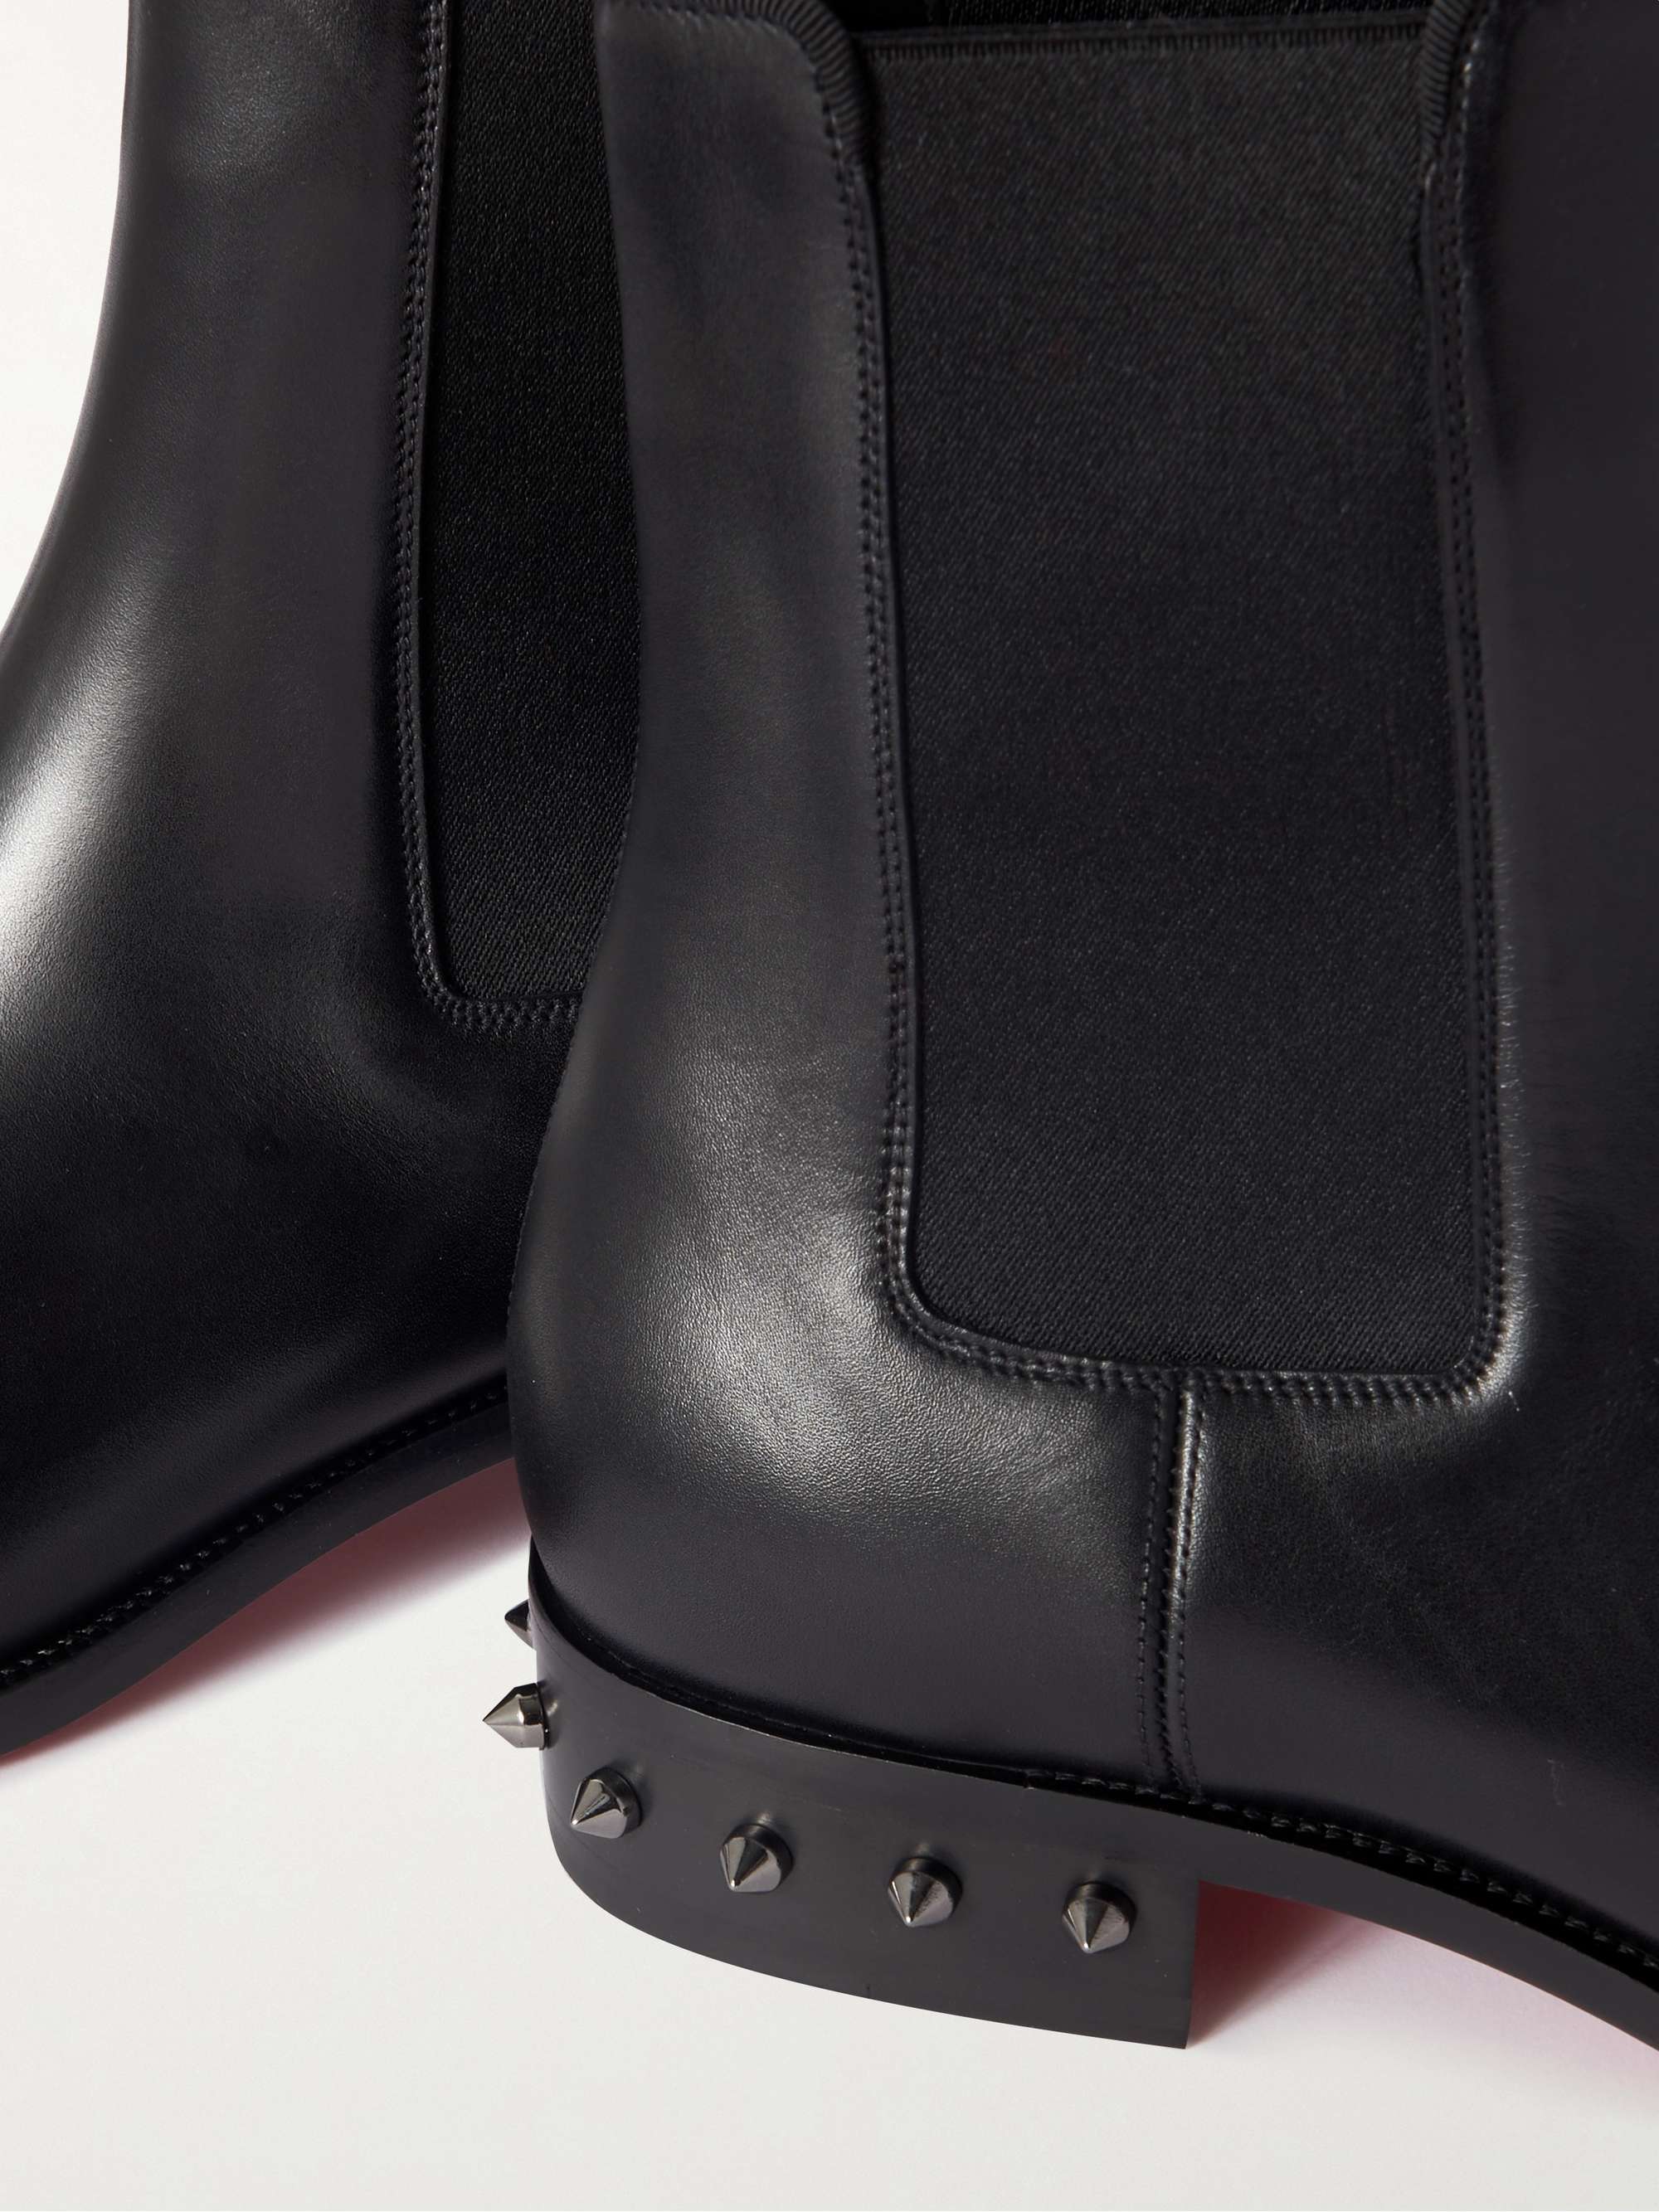 CHRISTIAN LOUBOUTIN Samson Studded Leather Chelsea Boots